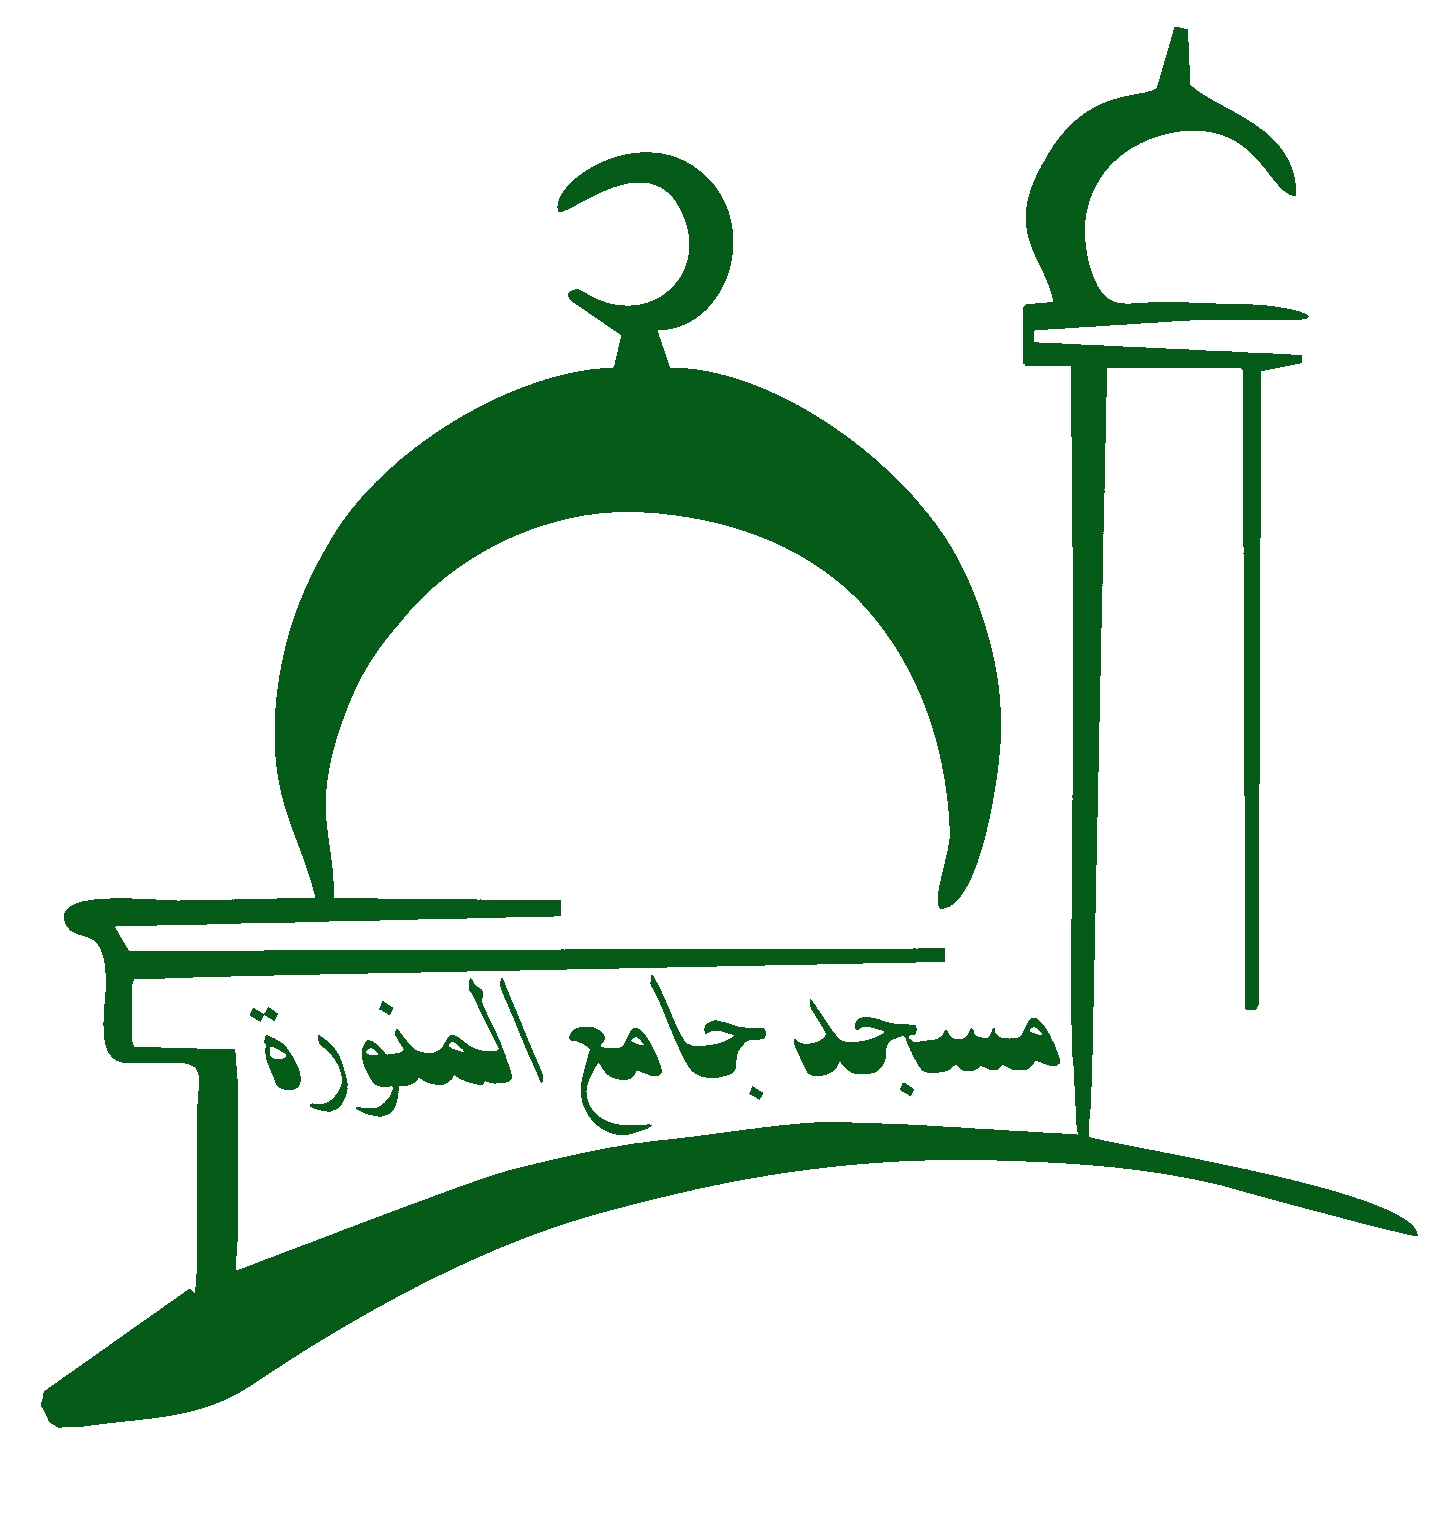  Gambar Logo Masjid Foto Bugil Bokep 2019